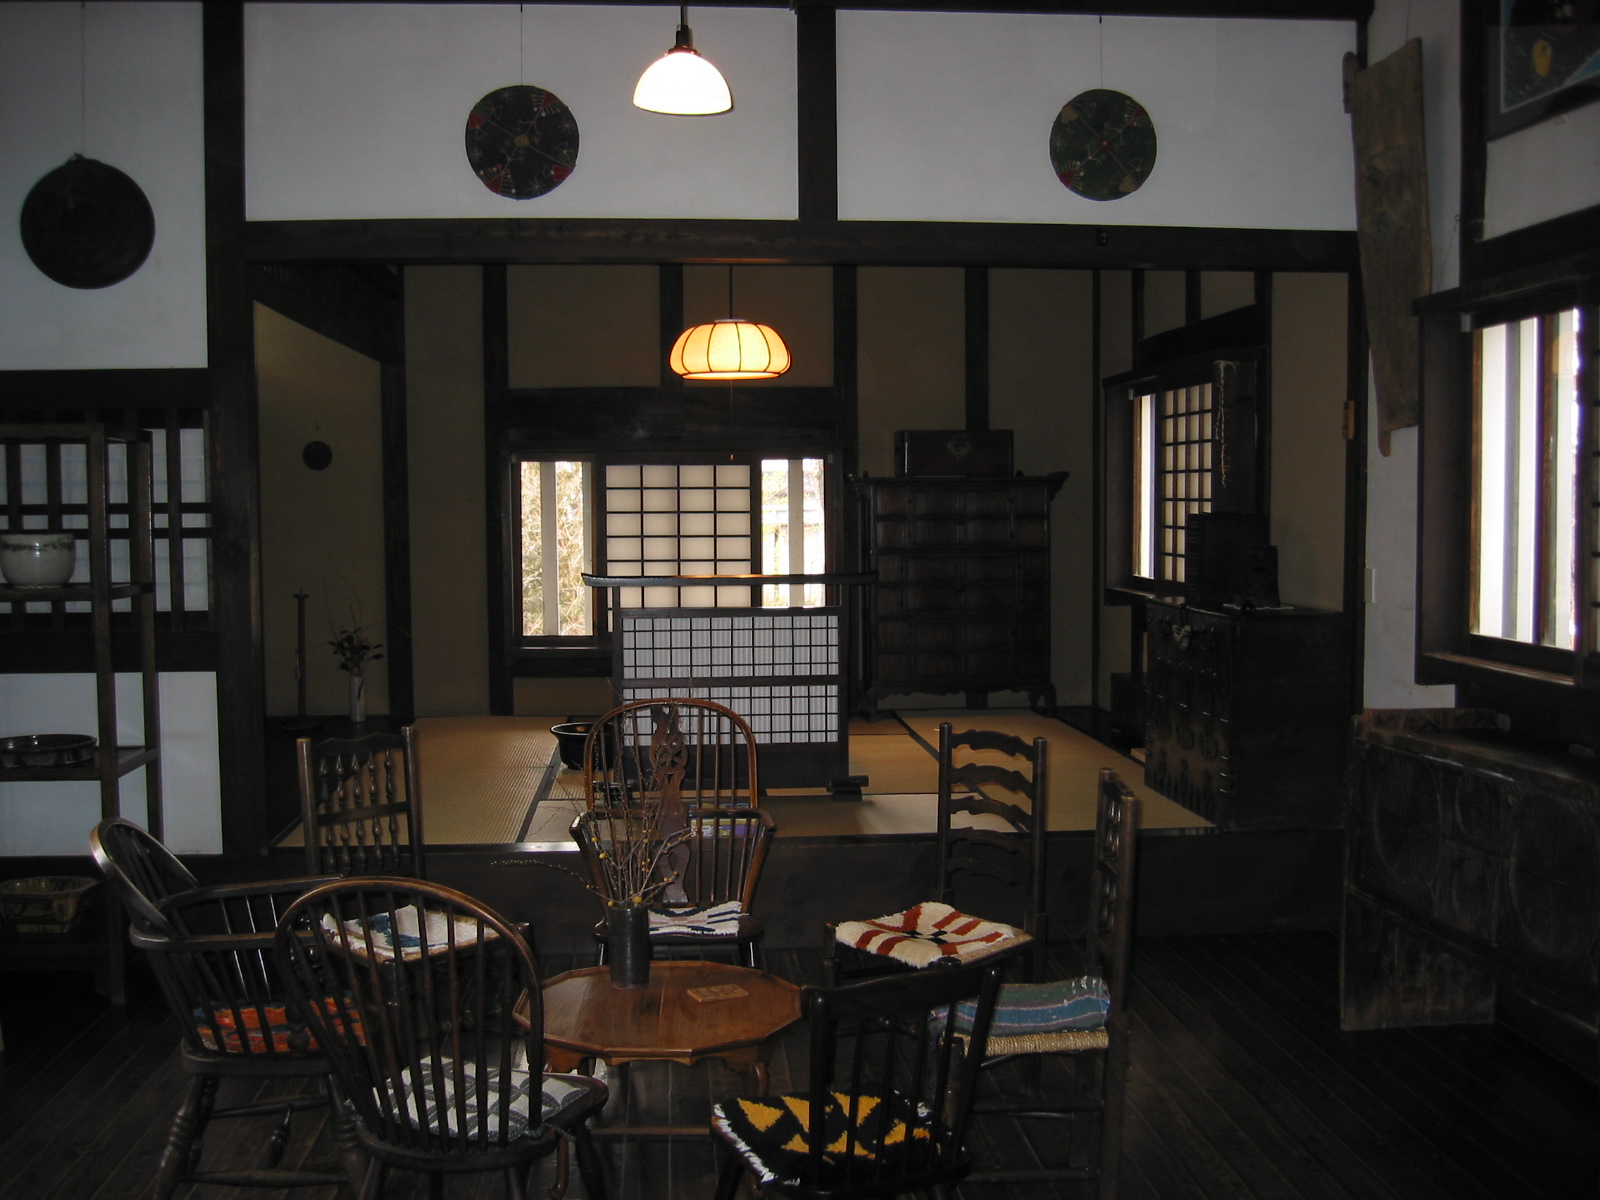 Matsumoto Folkcraft Museum